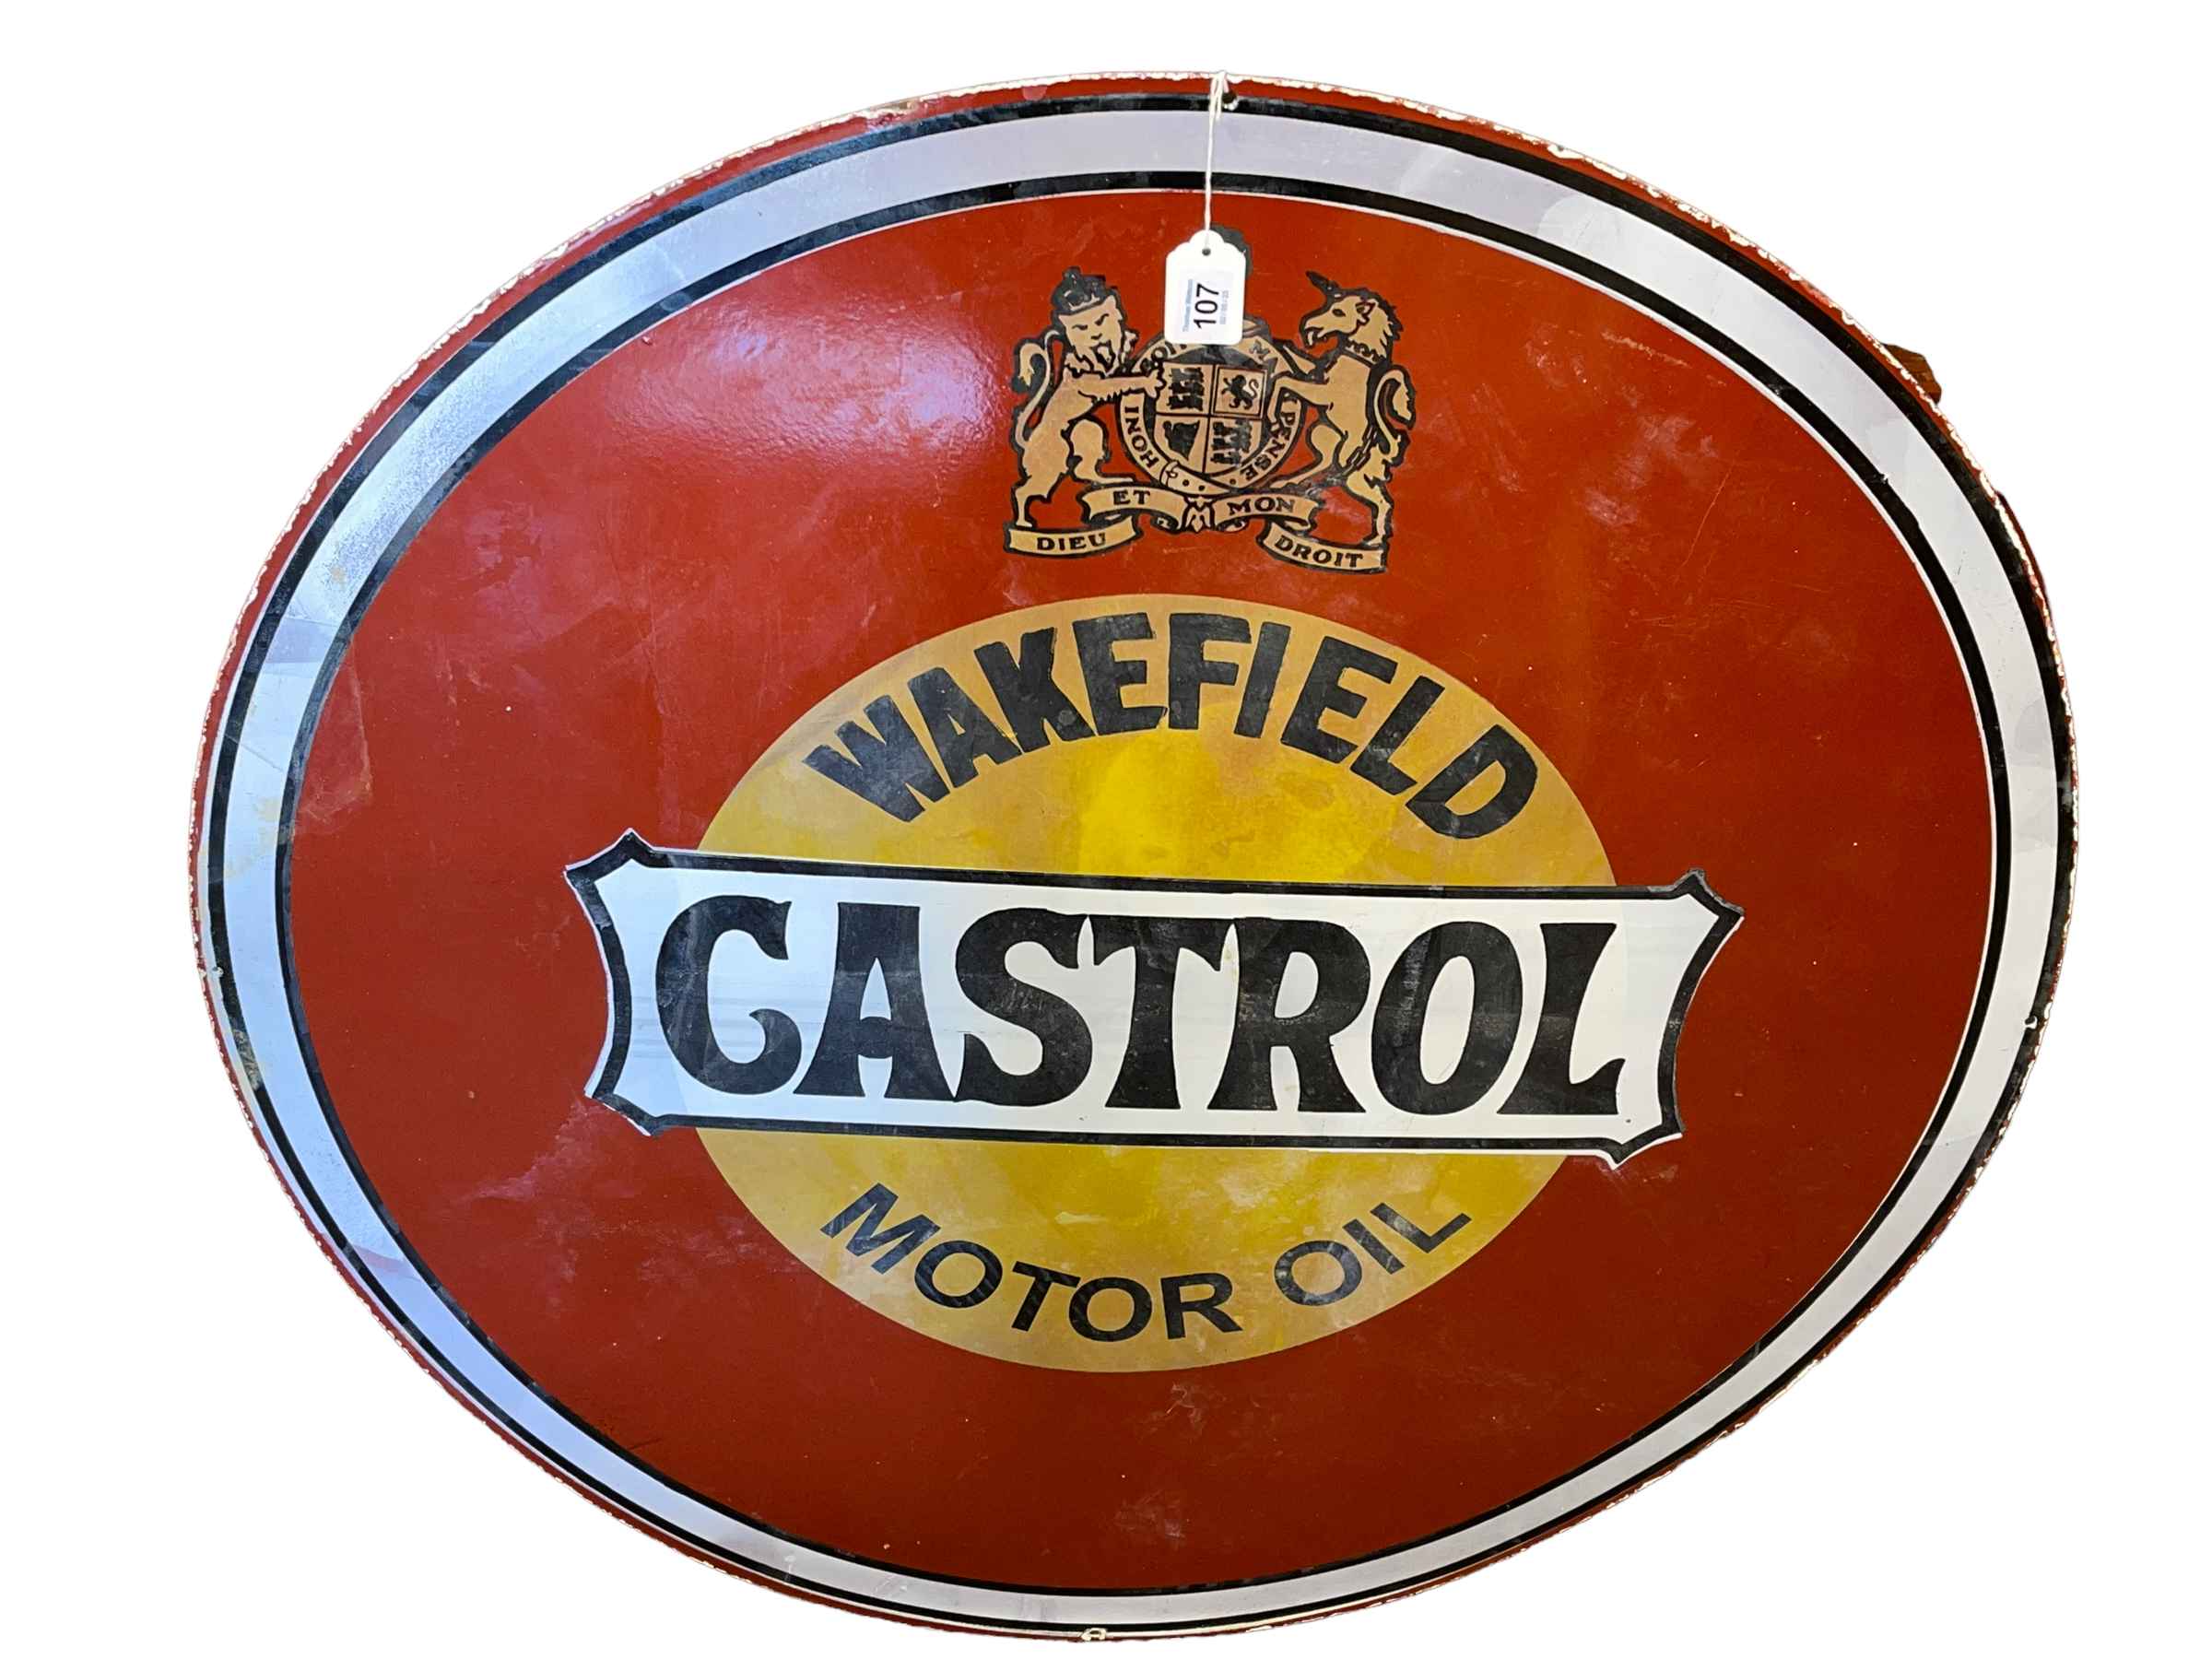 Large circular Castrol Motor Oil enamel sign, 91cm diameter.